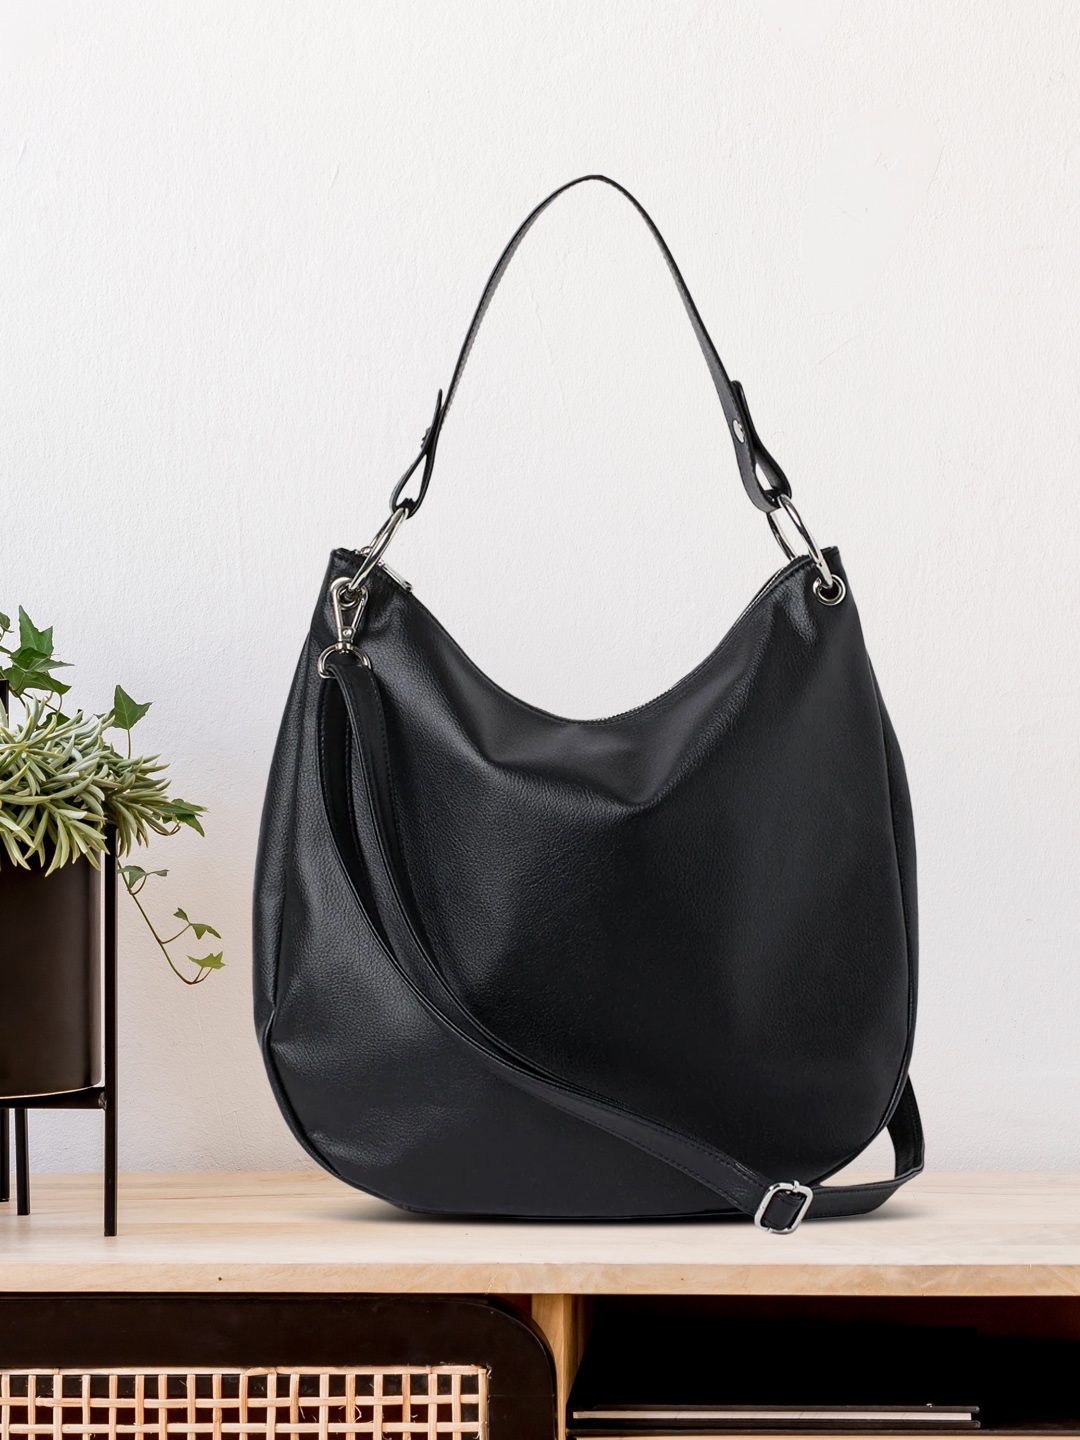 Simple Envelope Handbag, Women's Pu Leather Clutch Purse, Solid